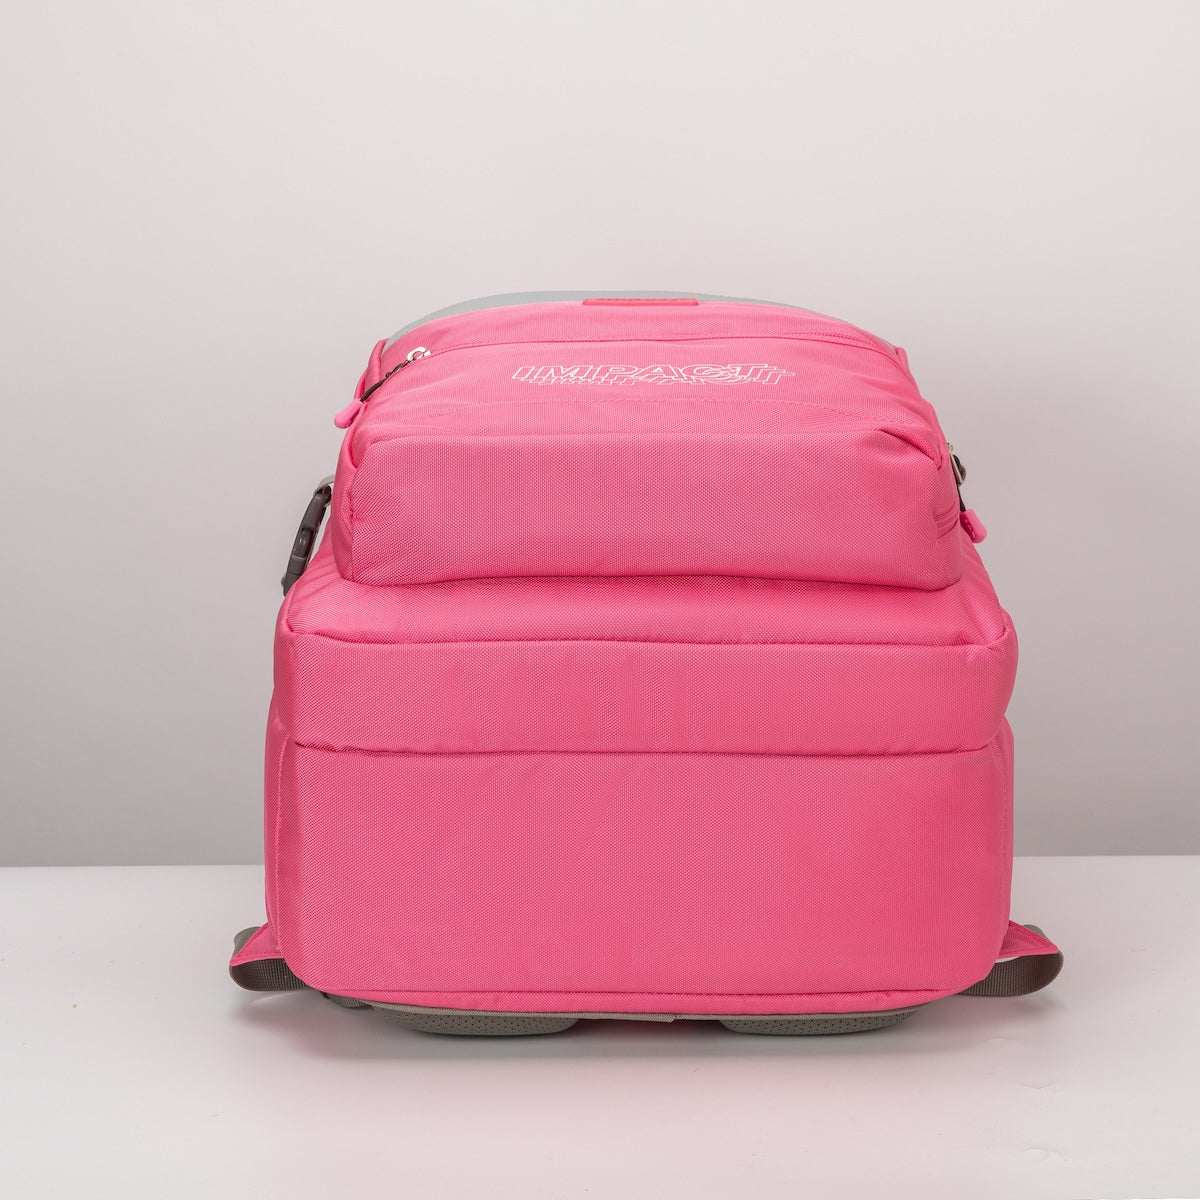 Impact School Bag IPEG-2369 - Ergo-Comfort Spinal Support Backpack